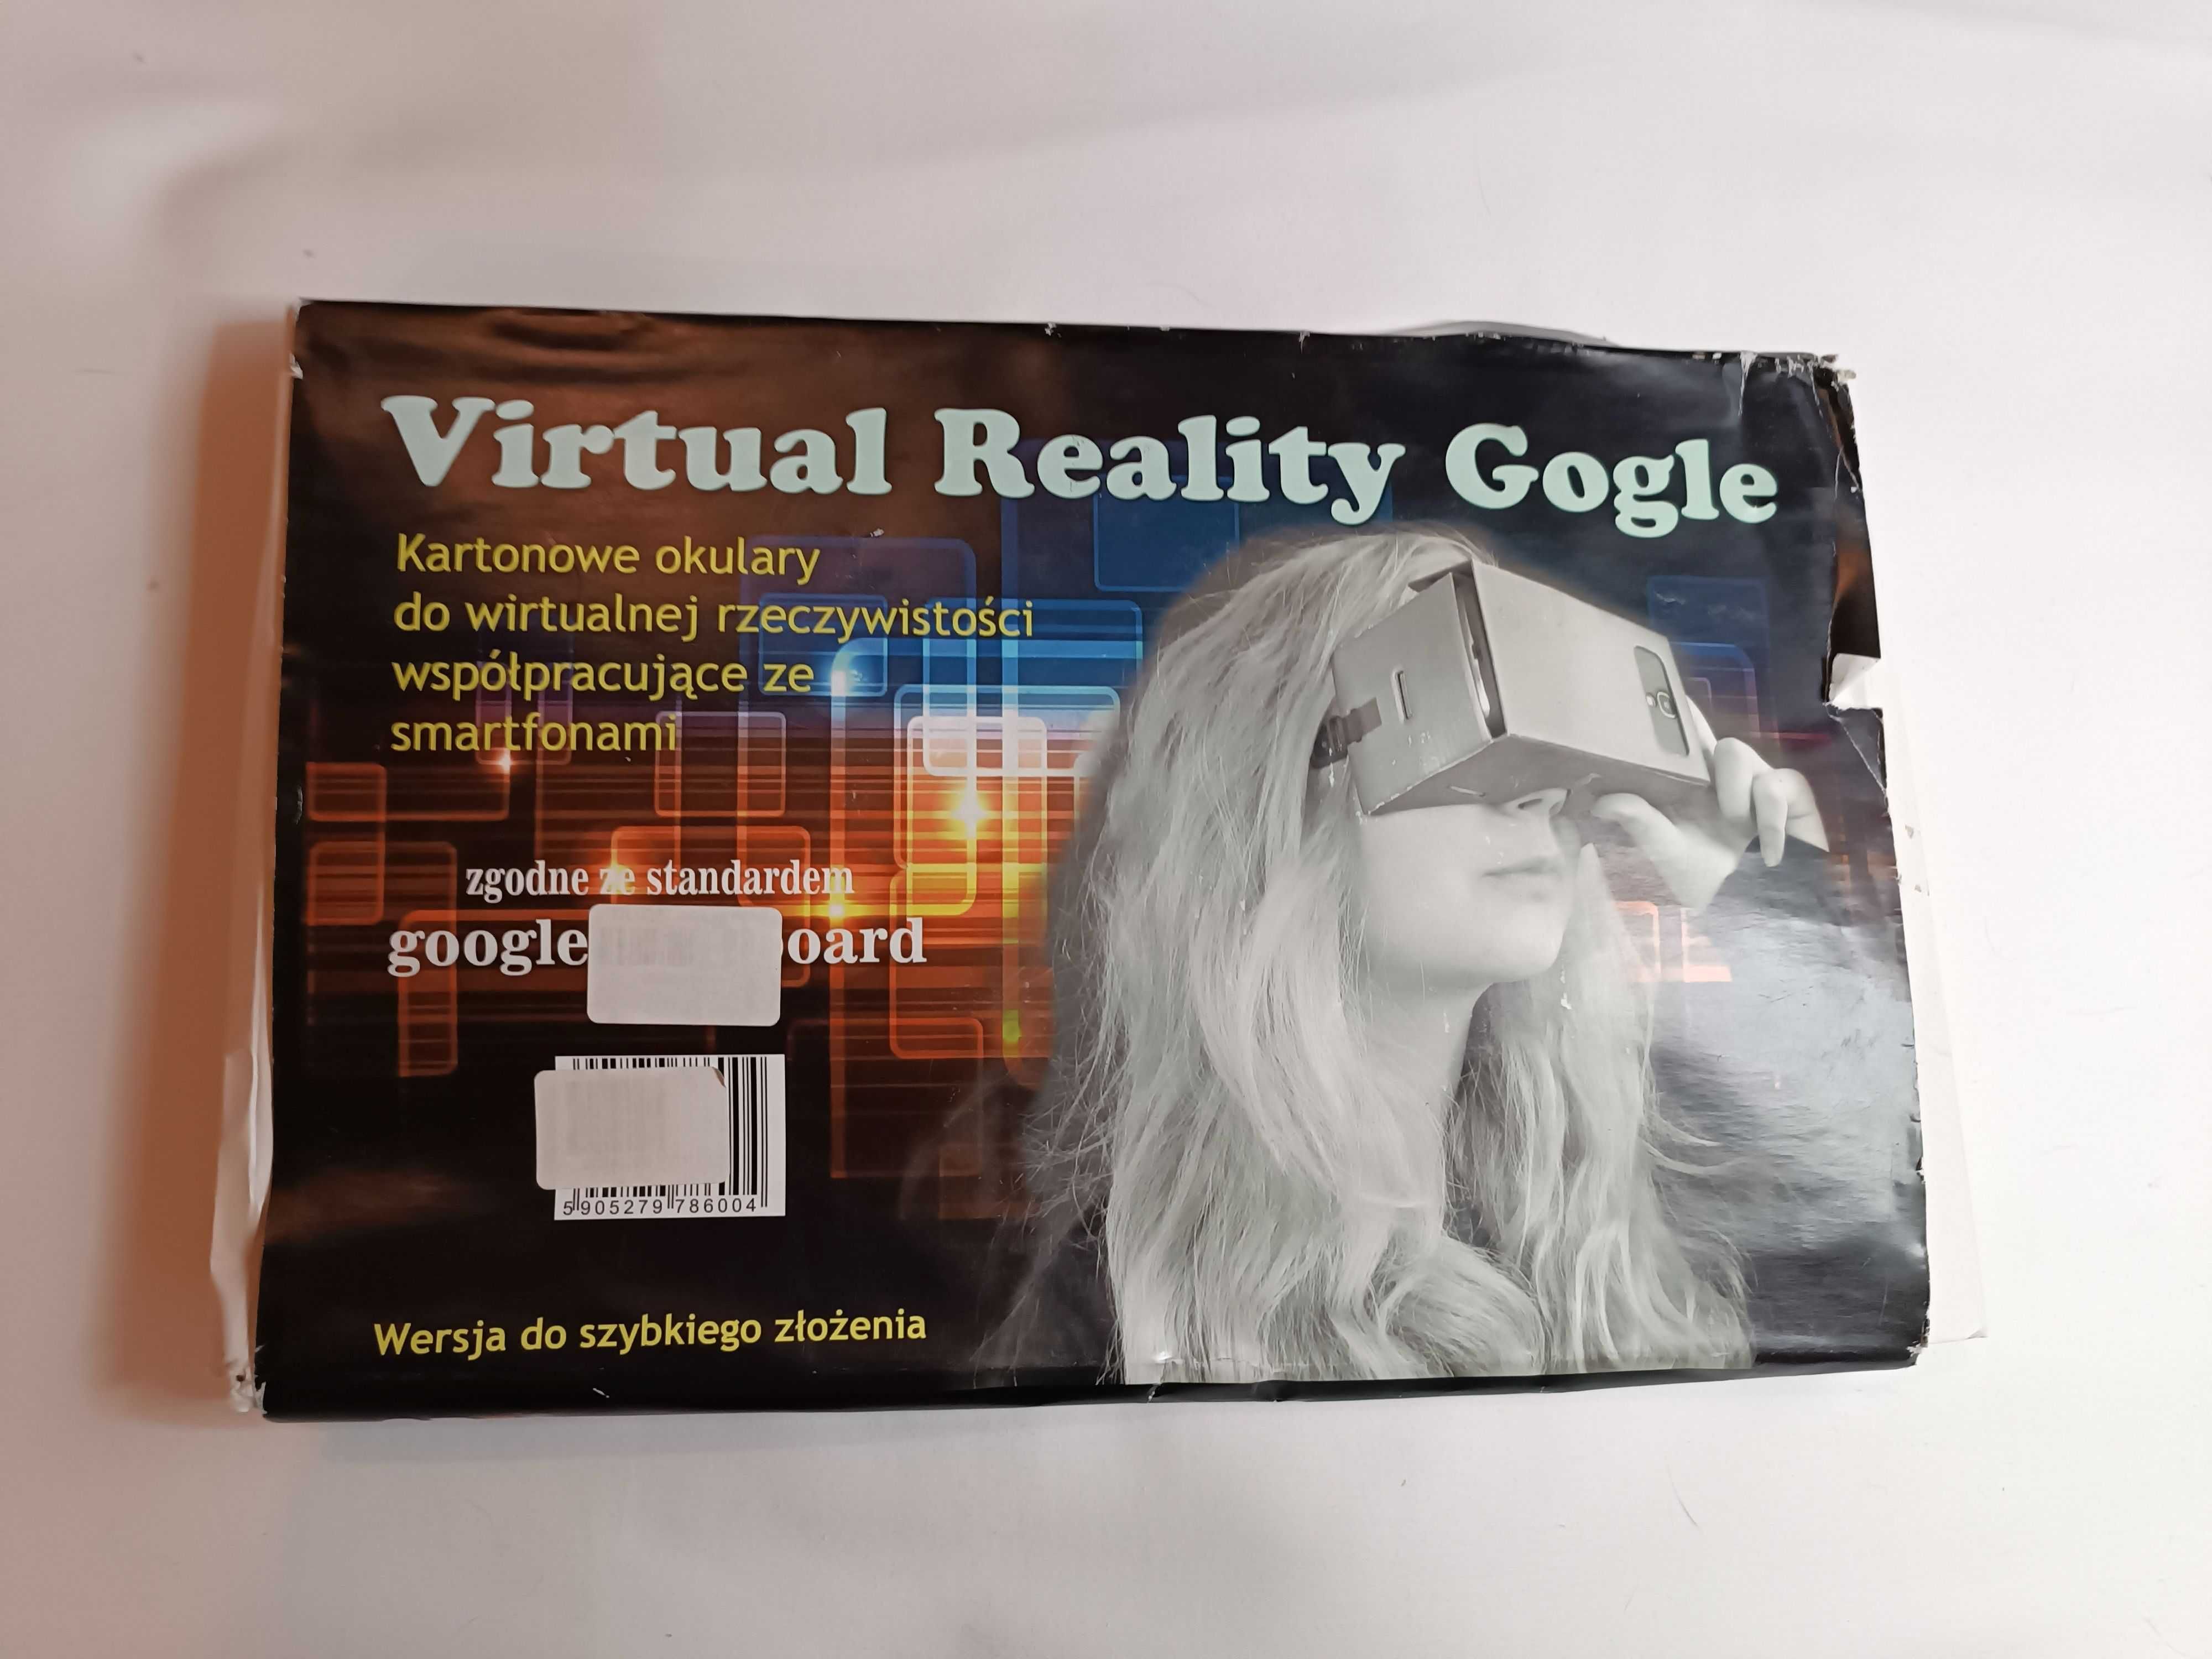 Virtual Reality Gogle